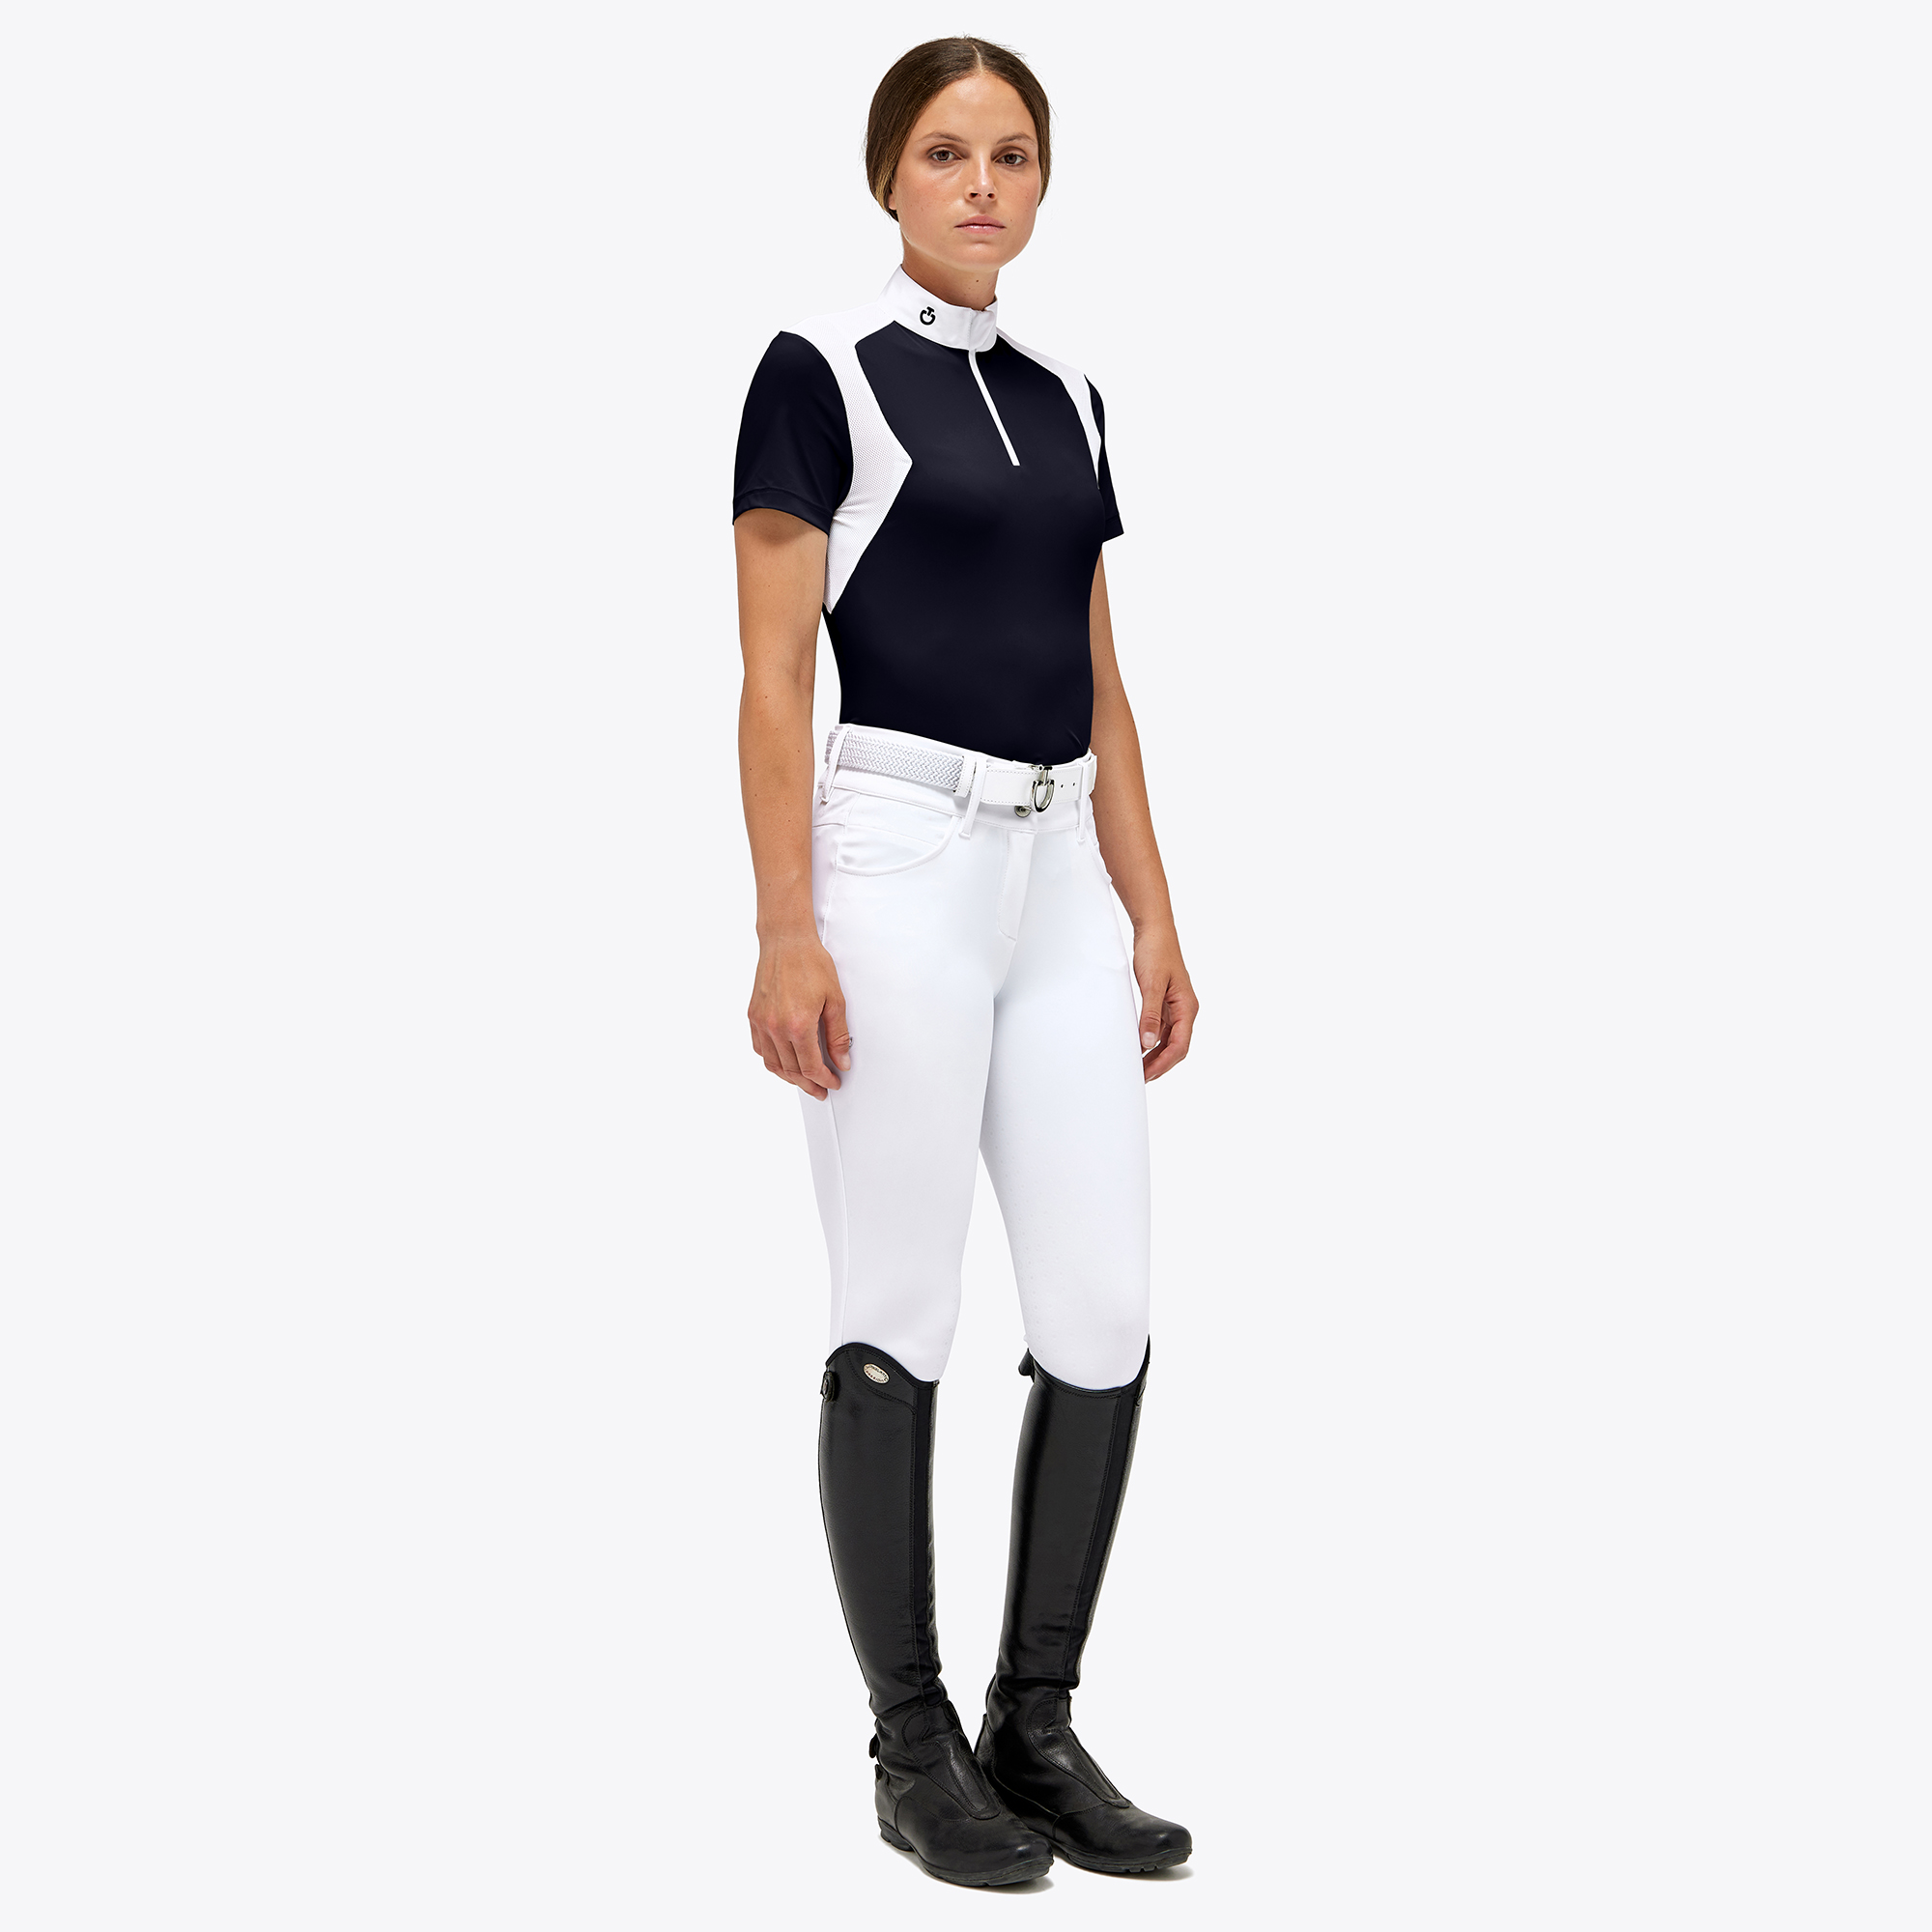 CAVALLERIA TOSCANA elegantes Damen Kurzarm Turniershirt Jersey Mesh - white/knit - L - 4